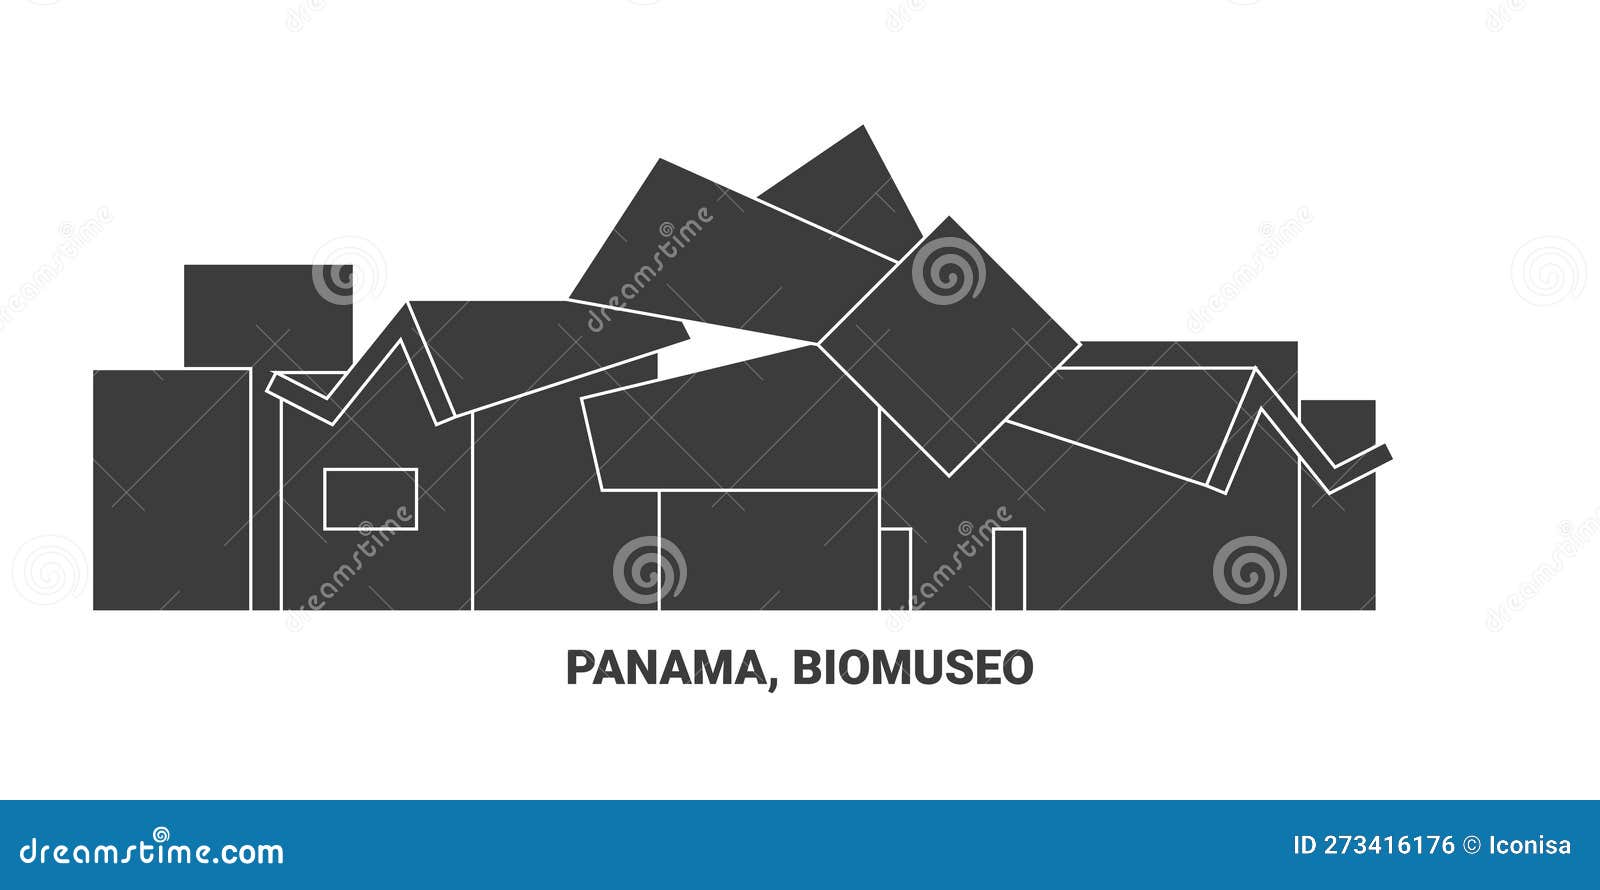 panama, biomuseo, travel landmark  